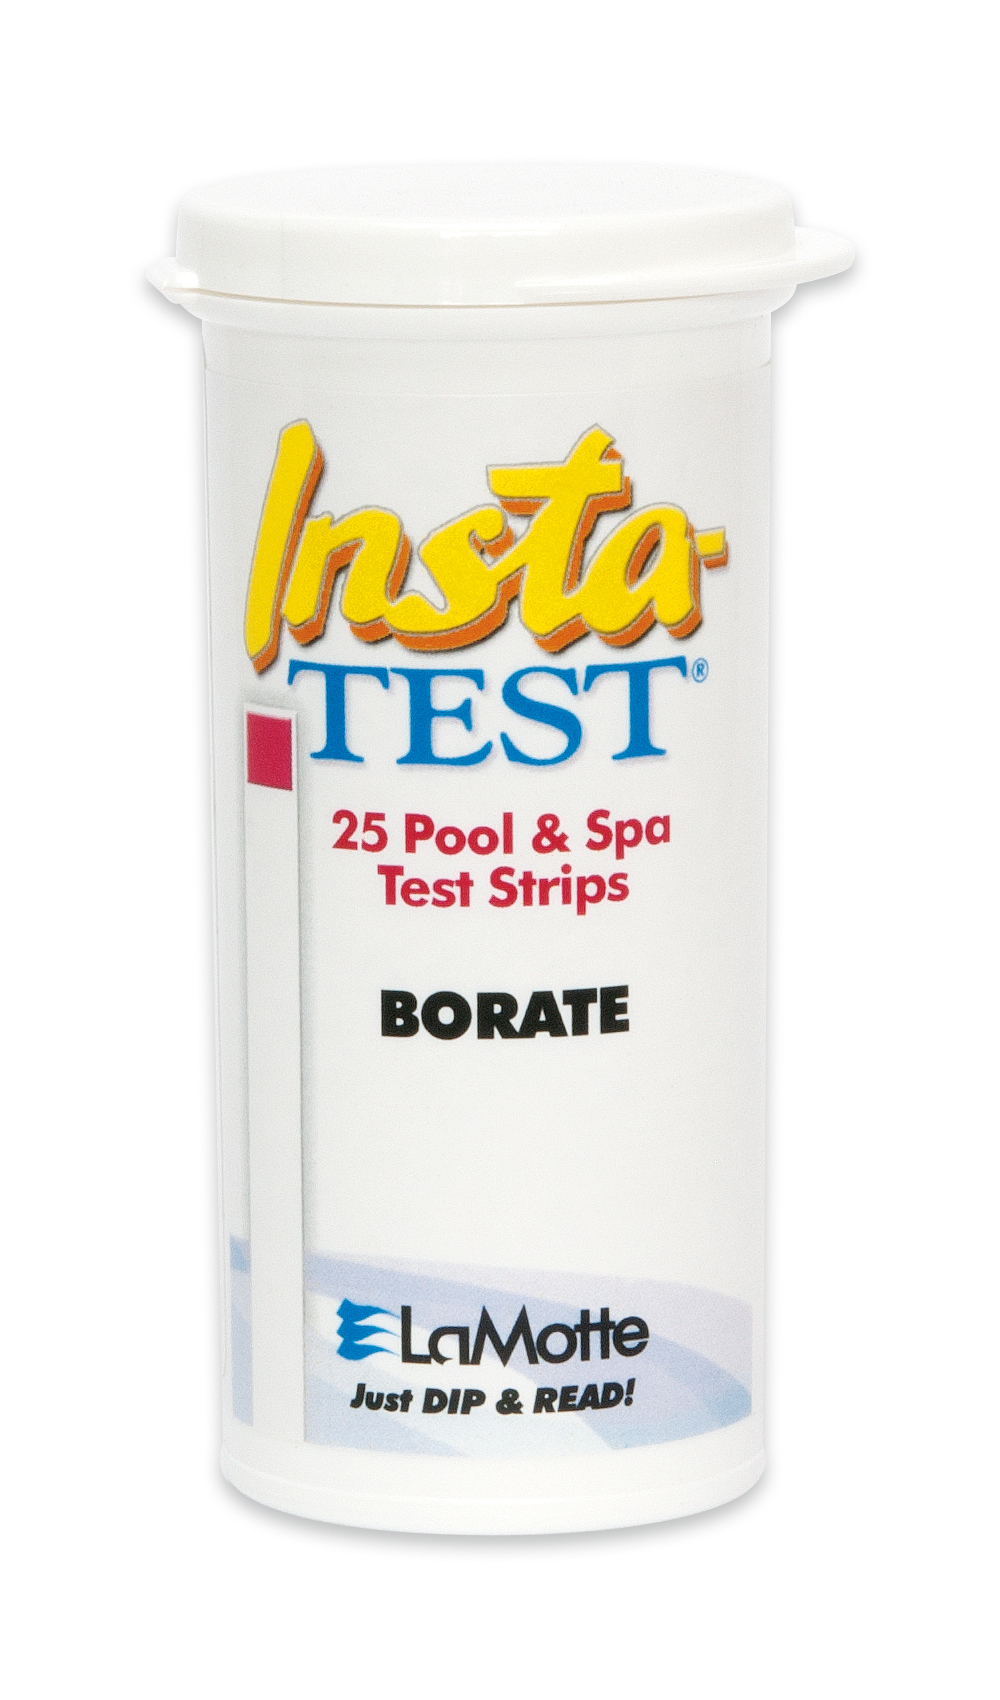 Insta-Test Borate Pool & Spa Test Strips